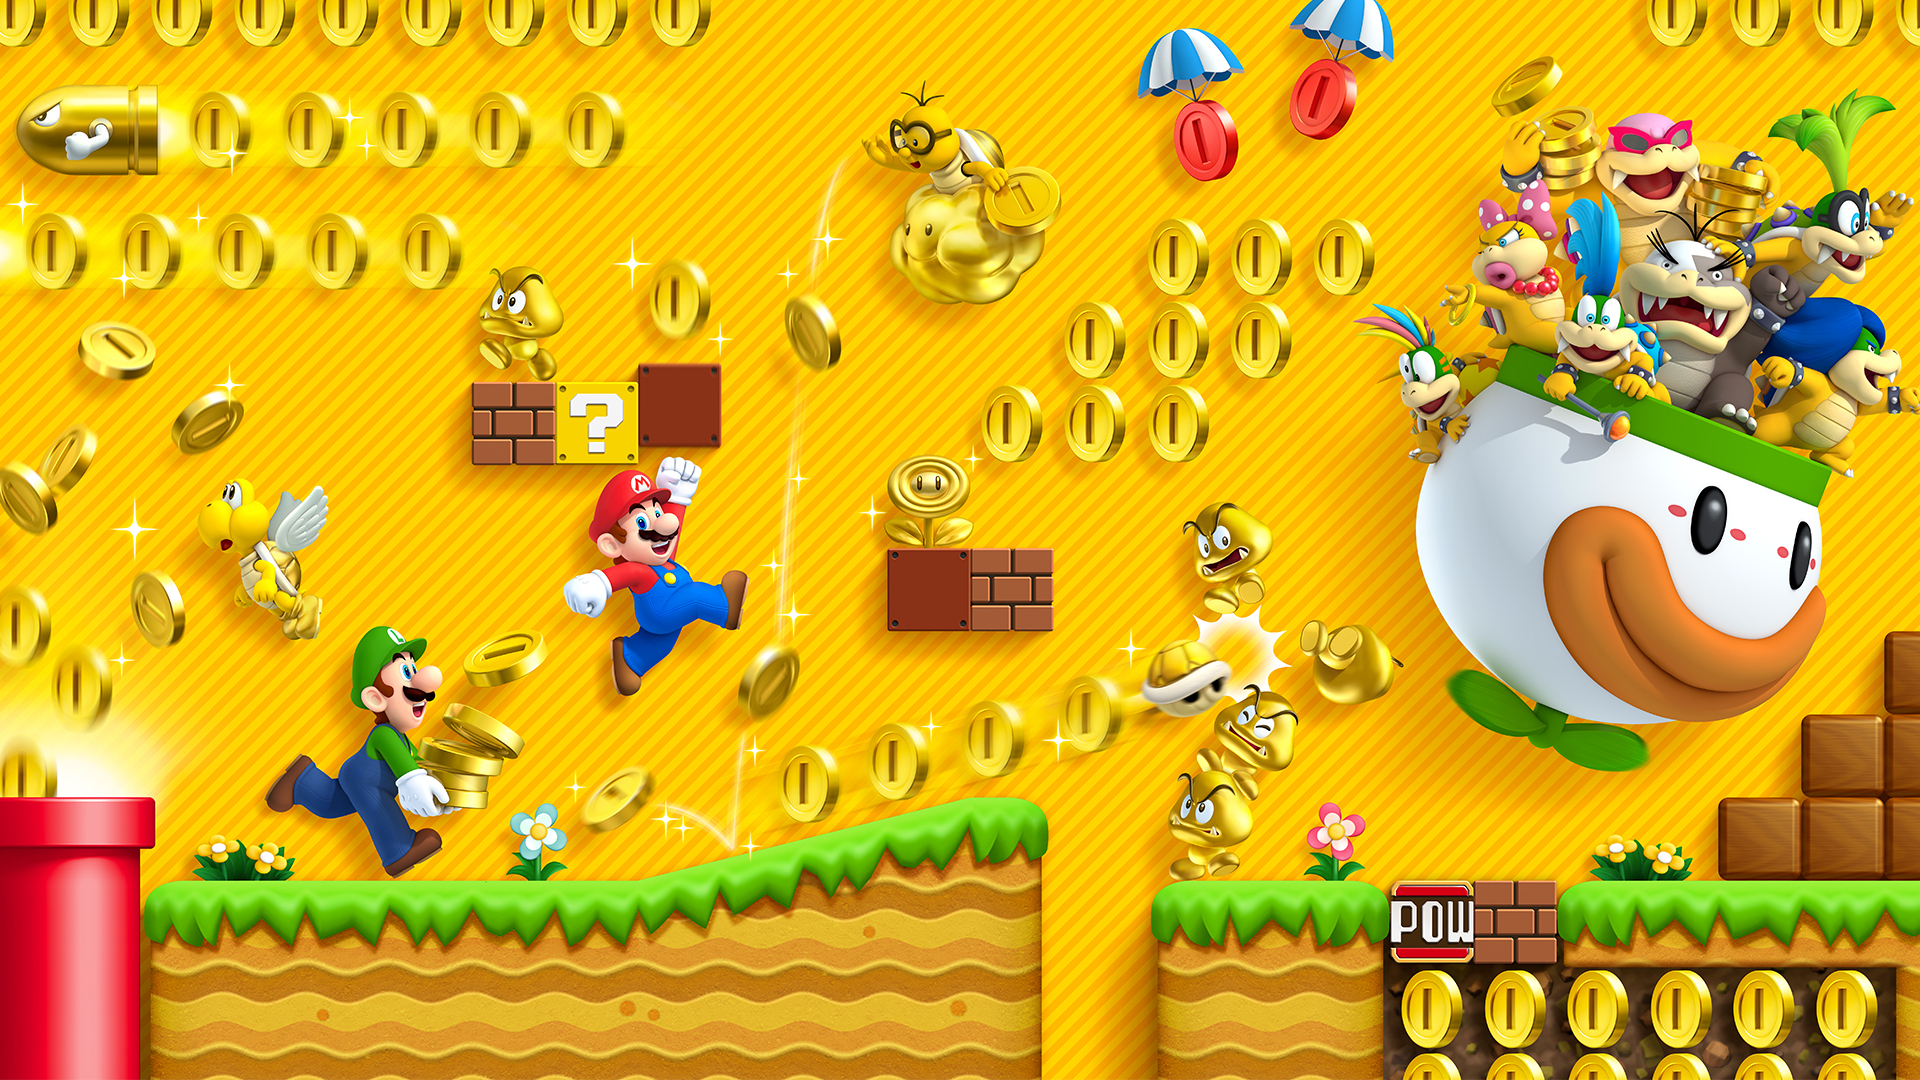 Best 3DS games - New Super Mario Bros. 2